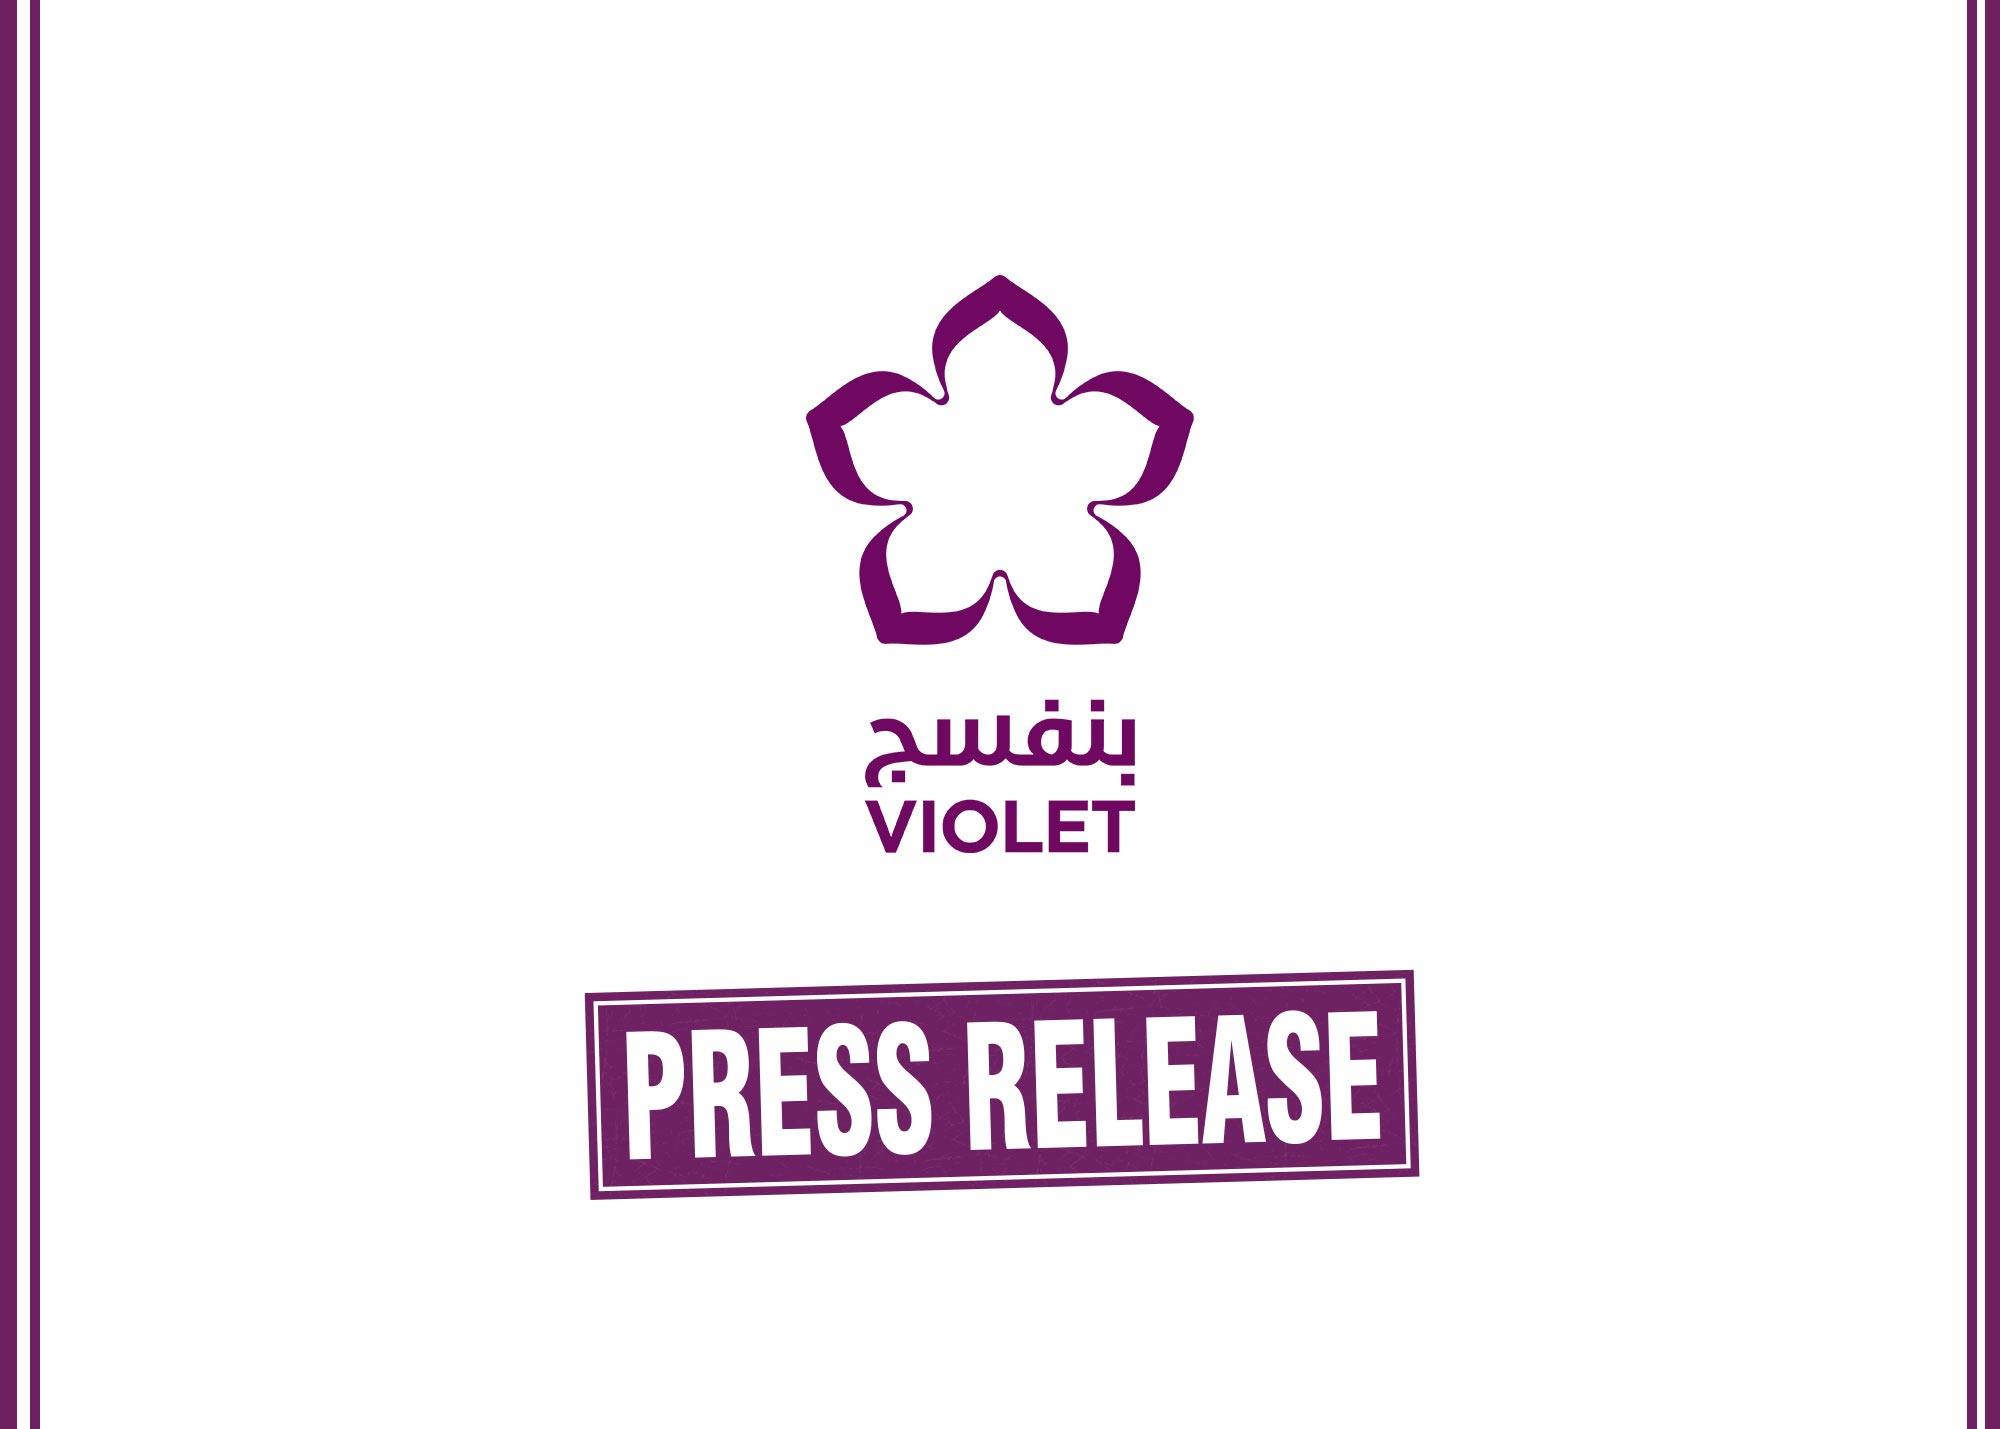 Press release - Violet organization